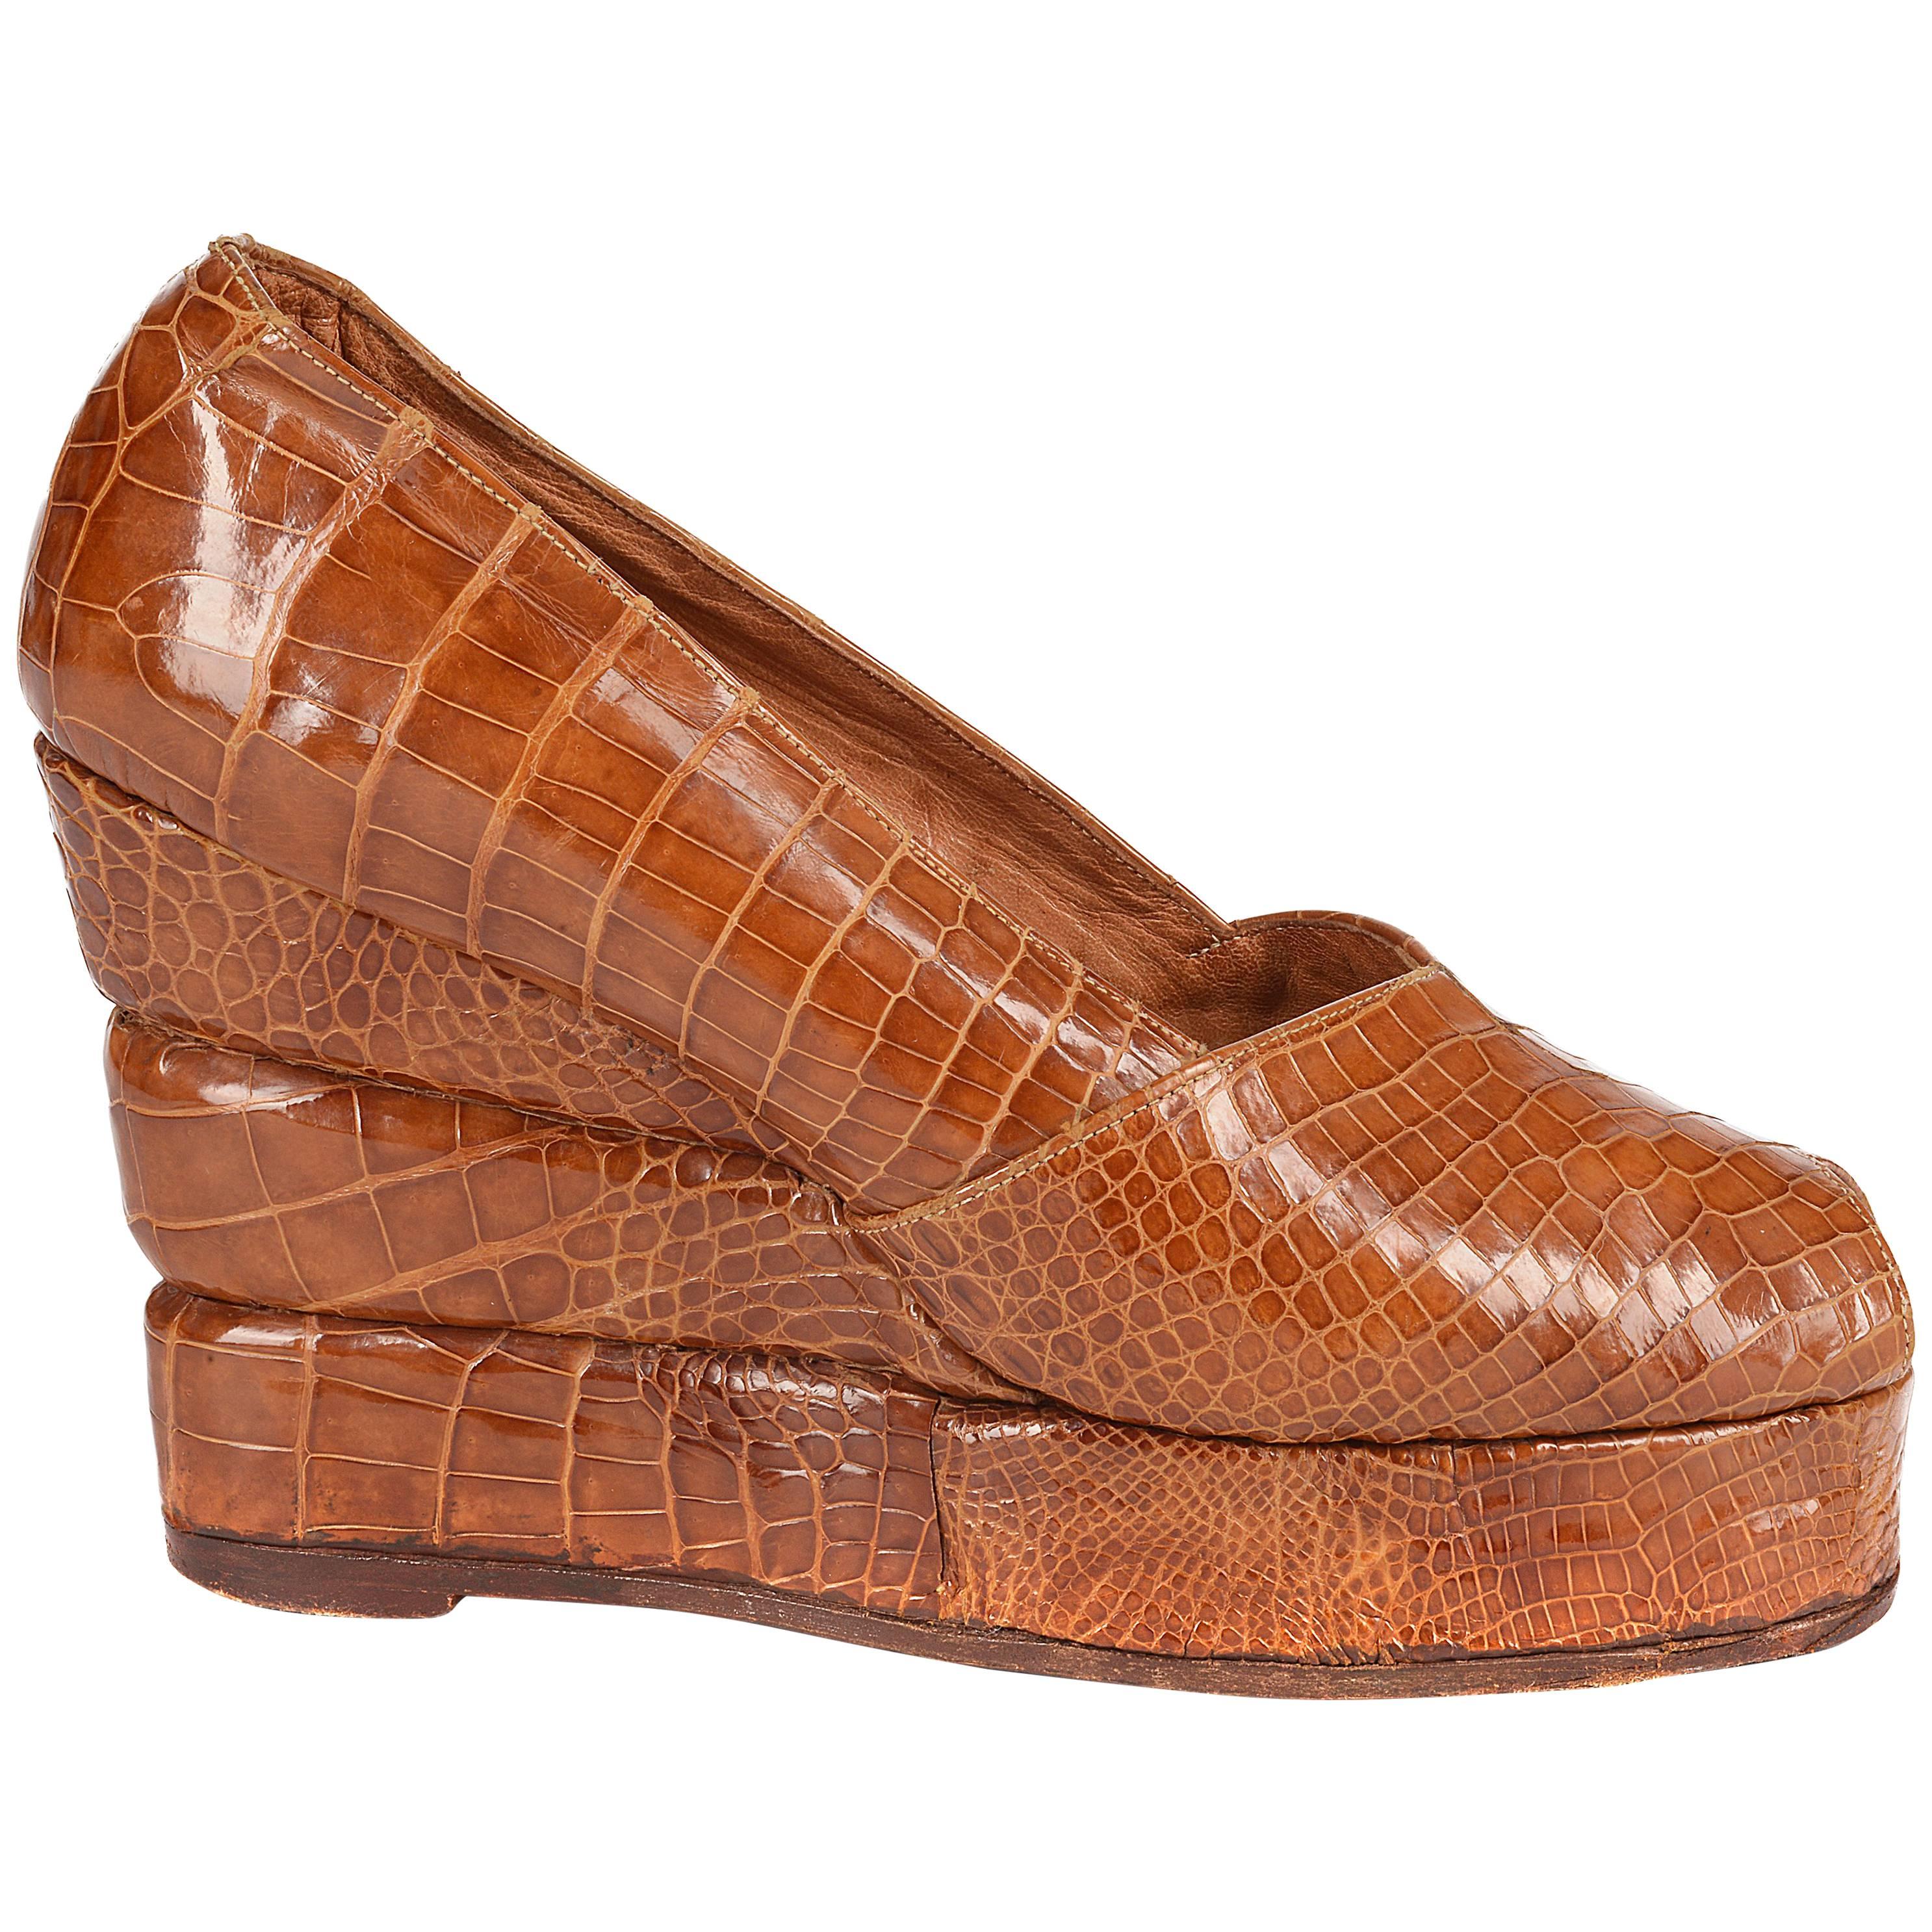 1940s tan crocodile open toe platform wedge shoes, sz 38